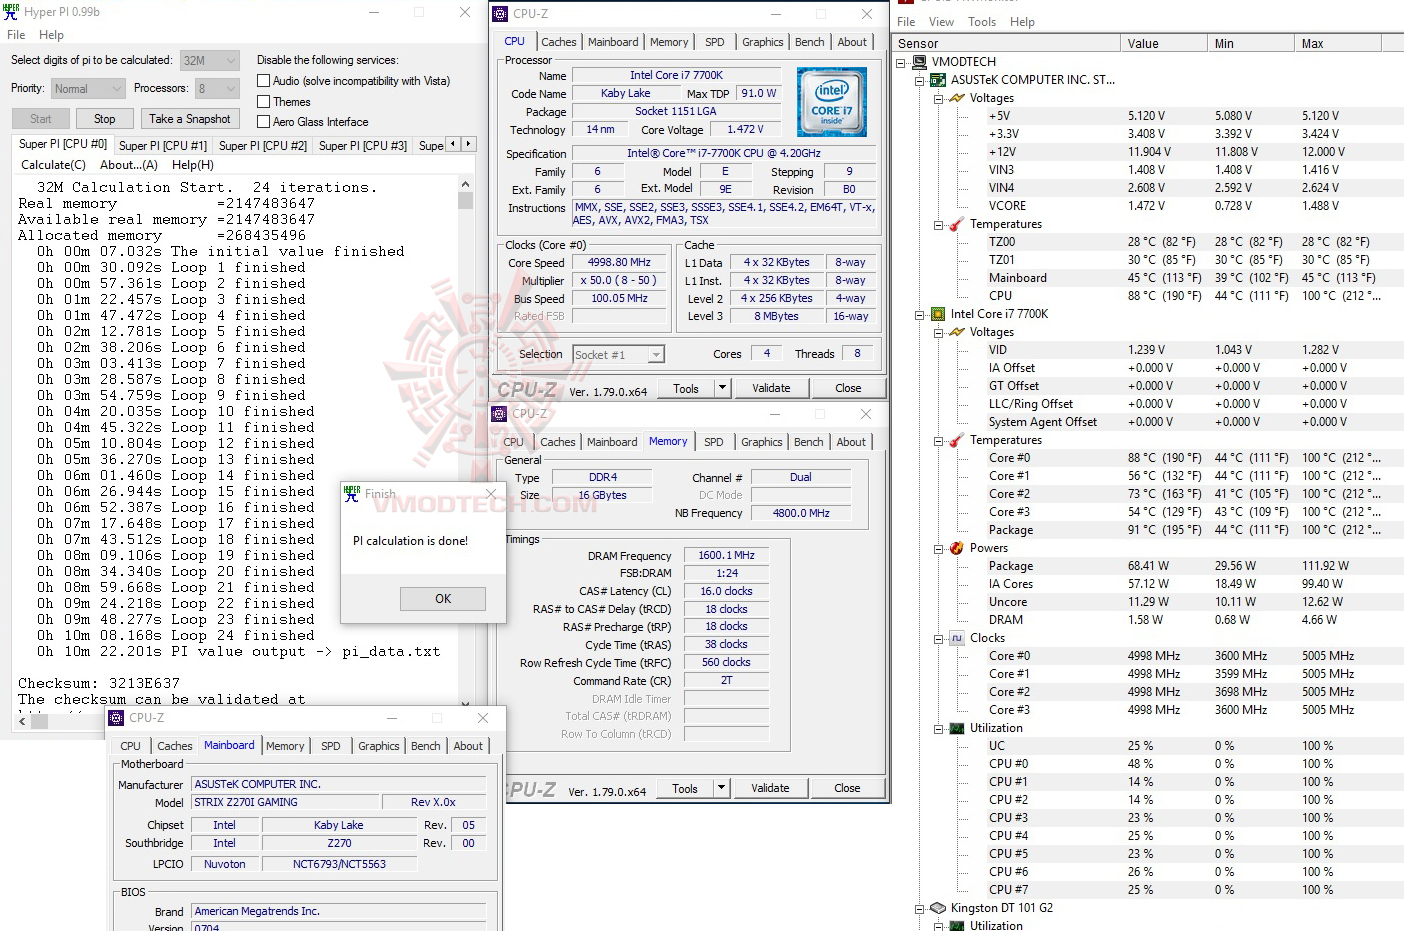 h32 G.SKILL Trident Z RGB DDR4 3200 (8X2) 16GB REVIEW